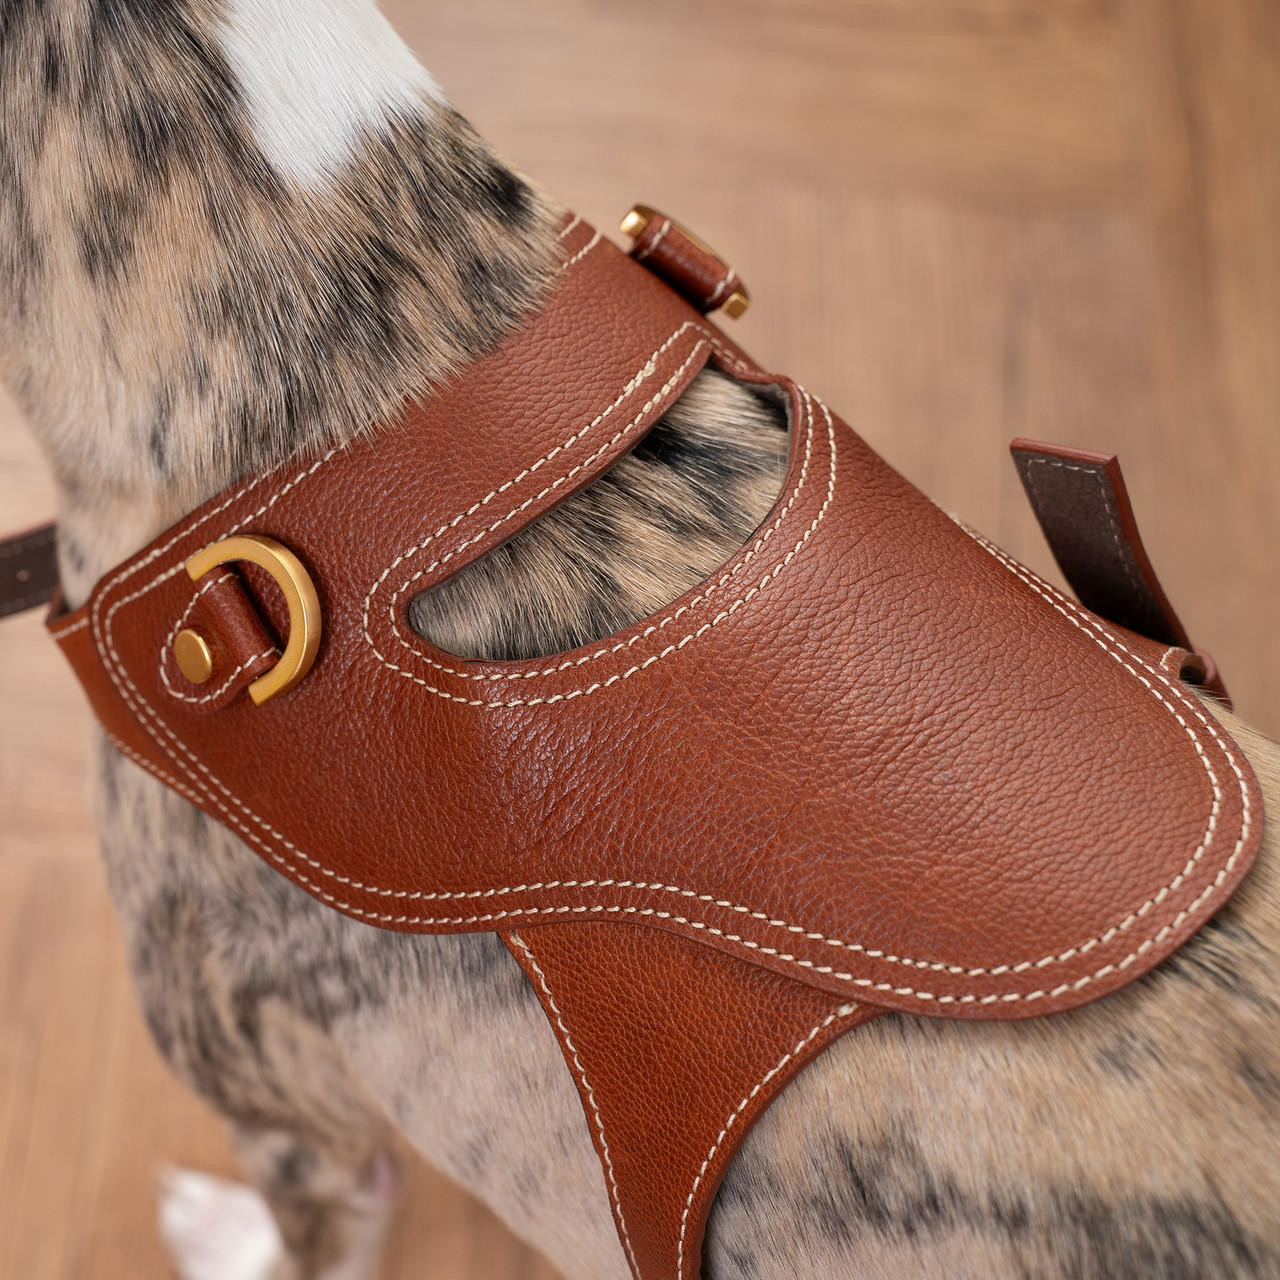  Kandog Leather Toscana Harness 